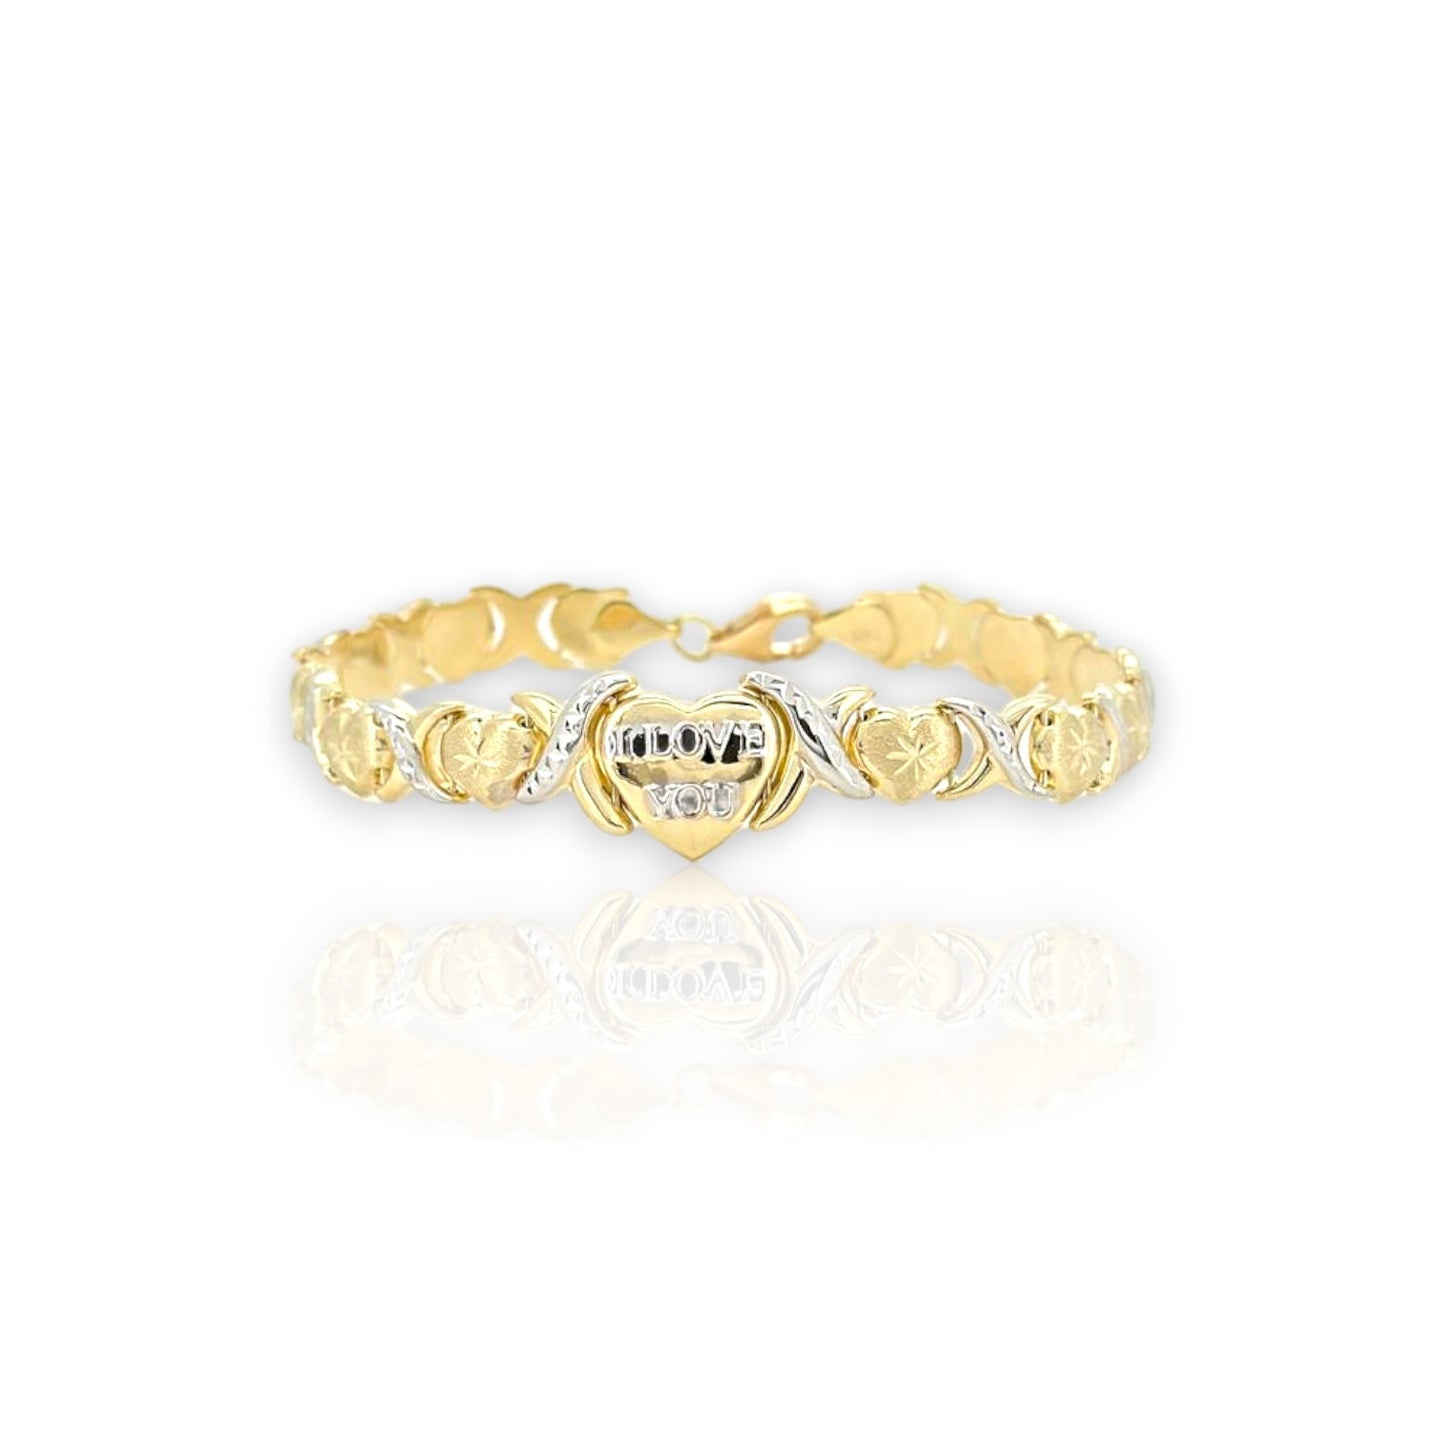 i love you heart bracelet - 10k yellow gold